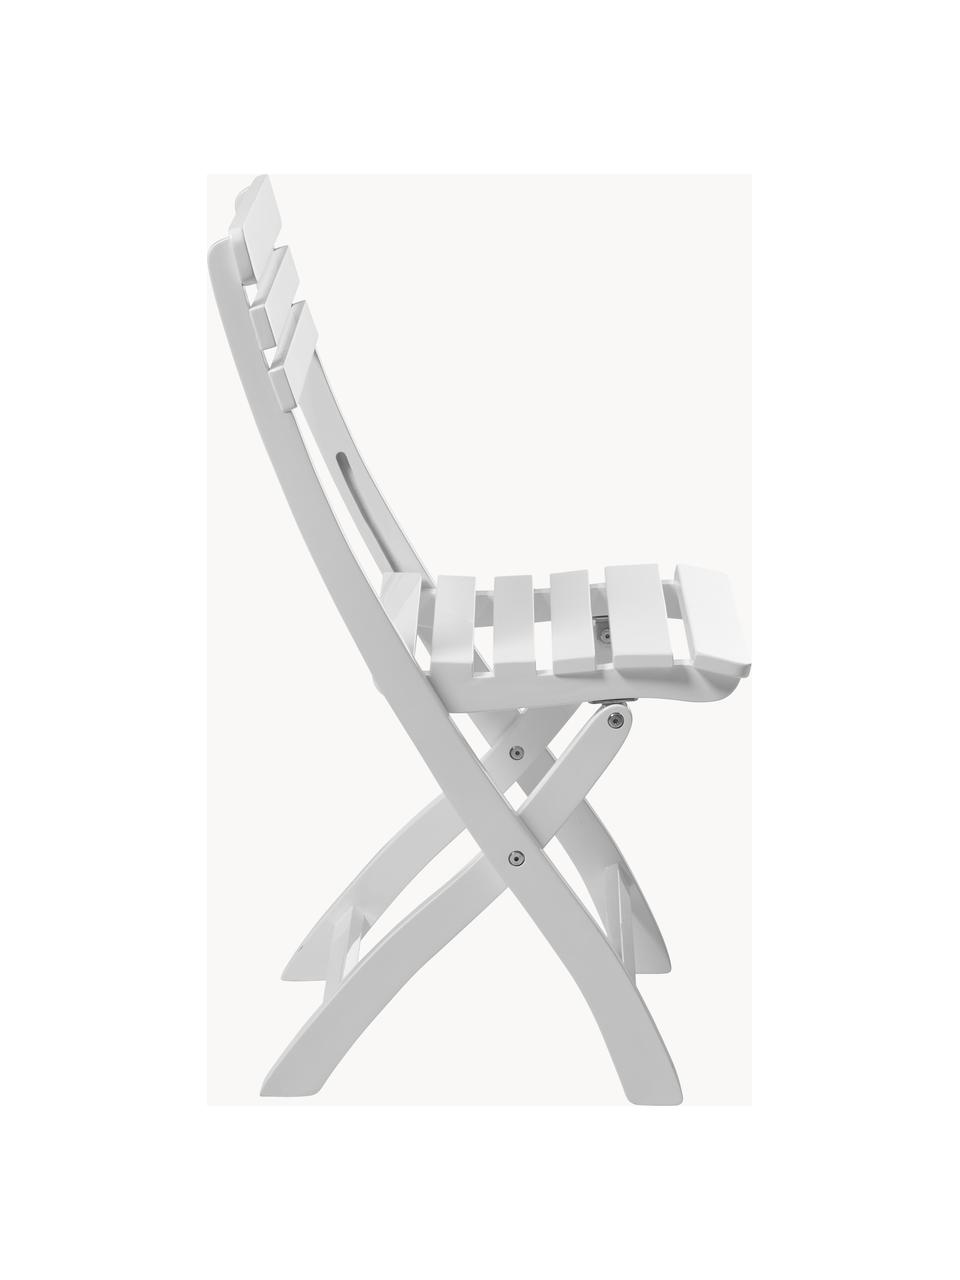 Zahradní židle Clarish, Lakované mahagonové dřevo, Bílá, Š 45 cm, V 88 cm